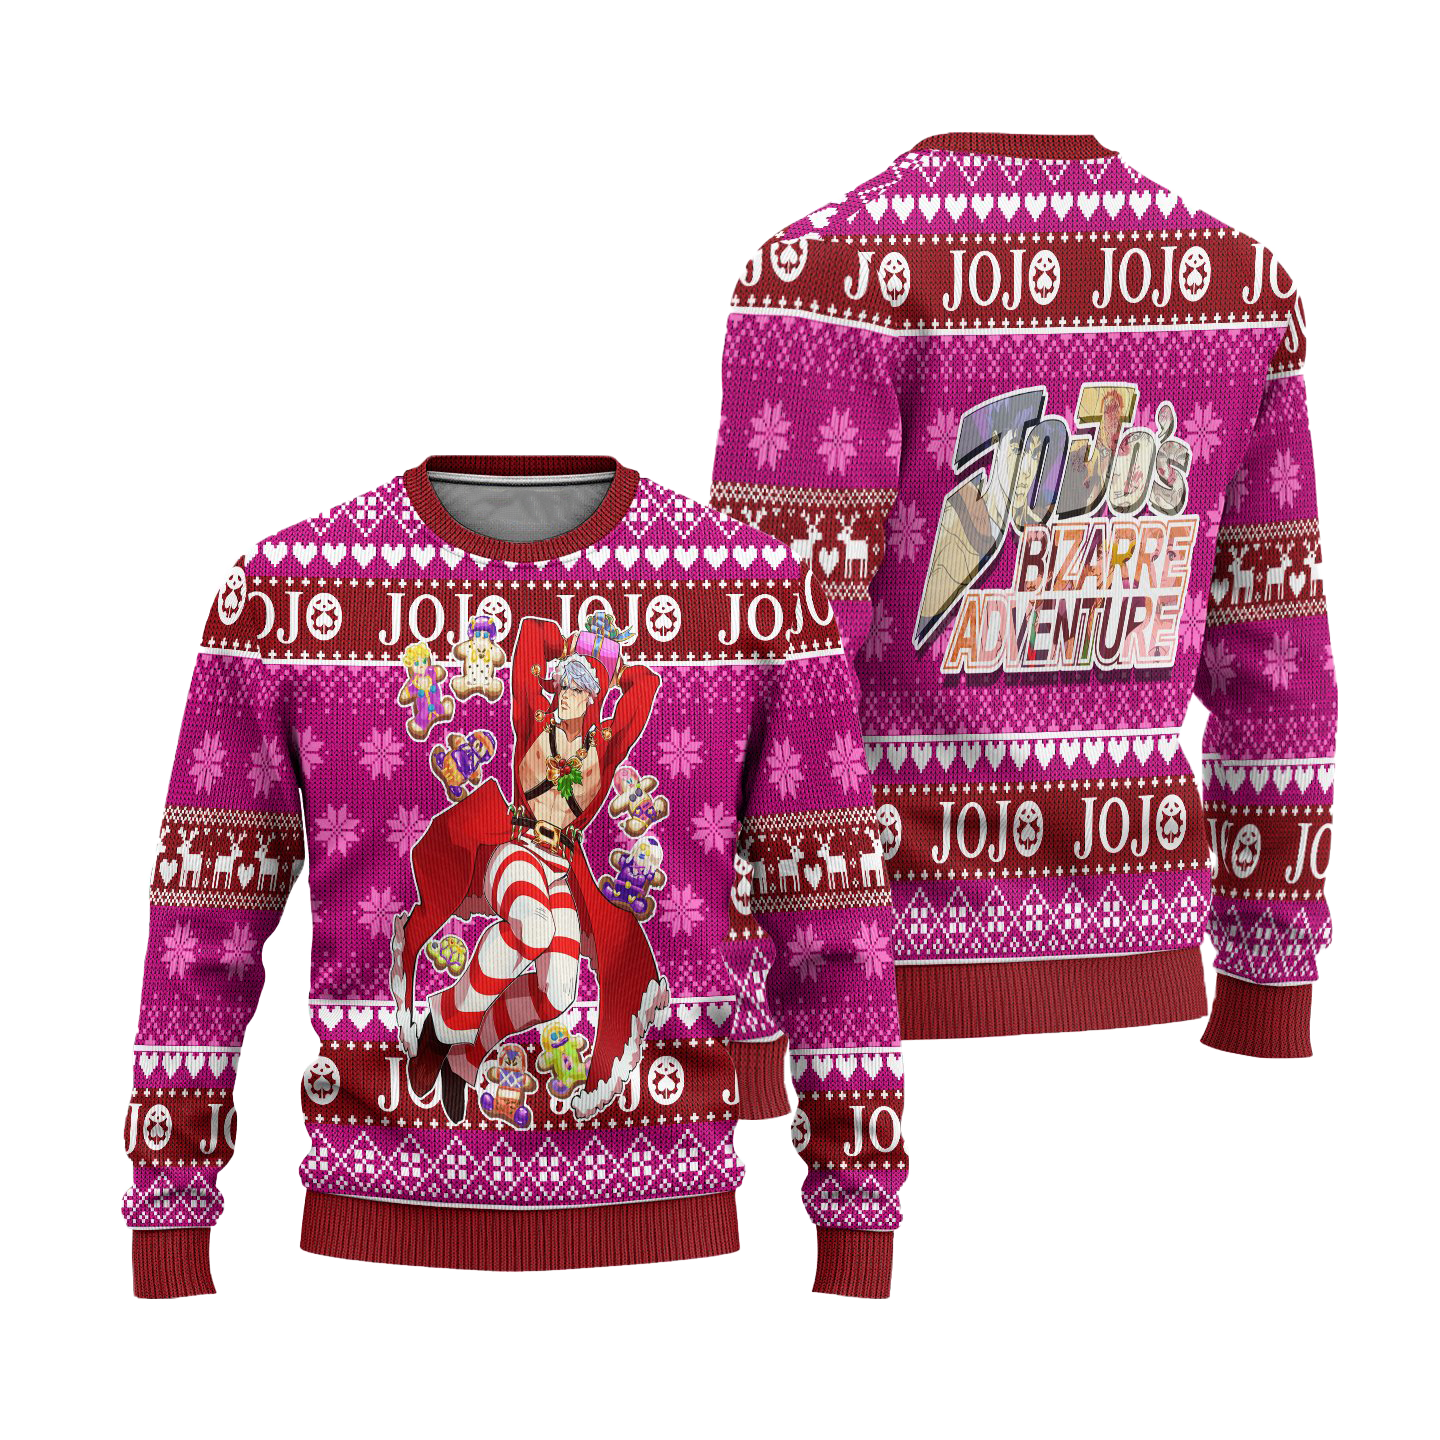 Jonathan Joestar Anime Ugly Christmas Sweater Custom JoJos Bizarre Adventure Xmas Gift